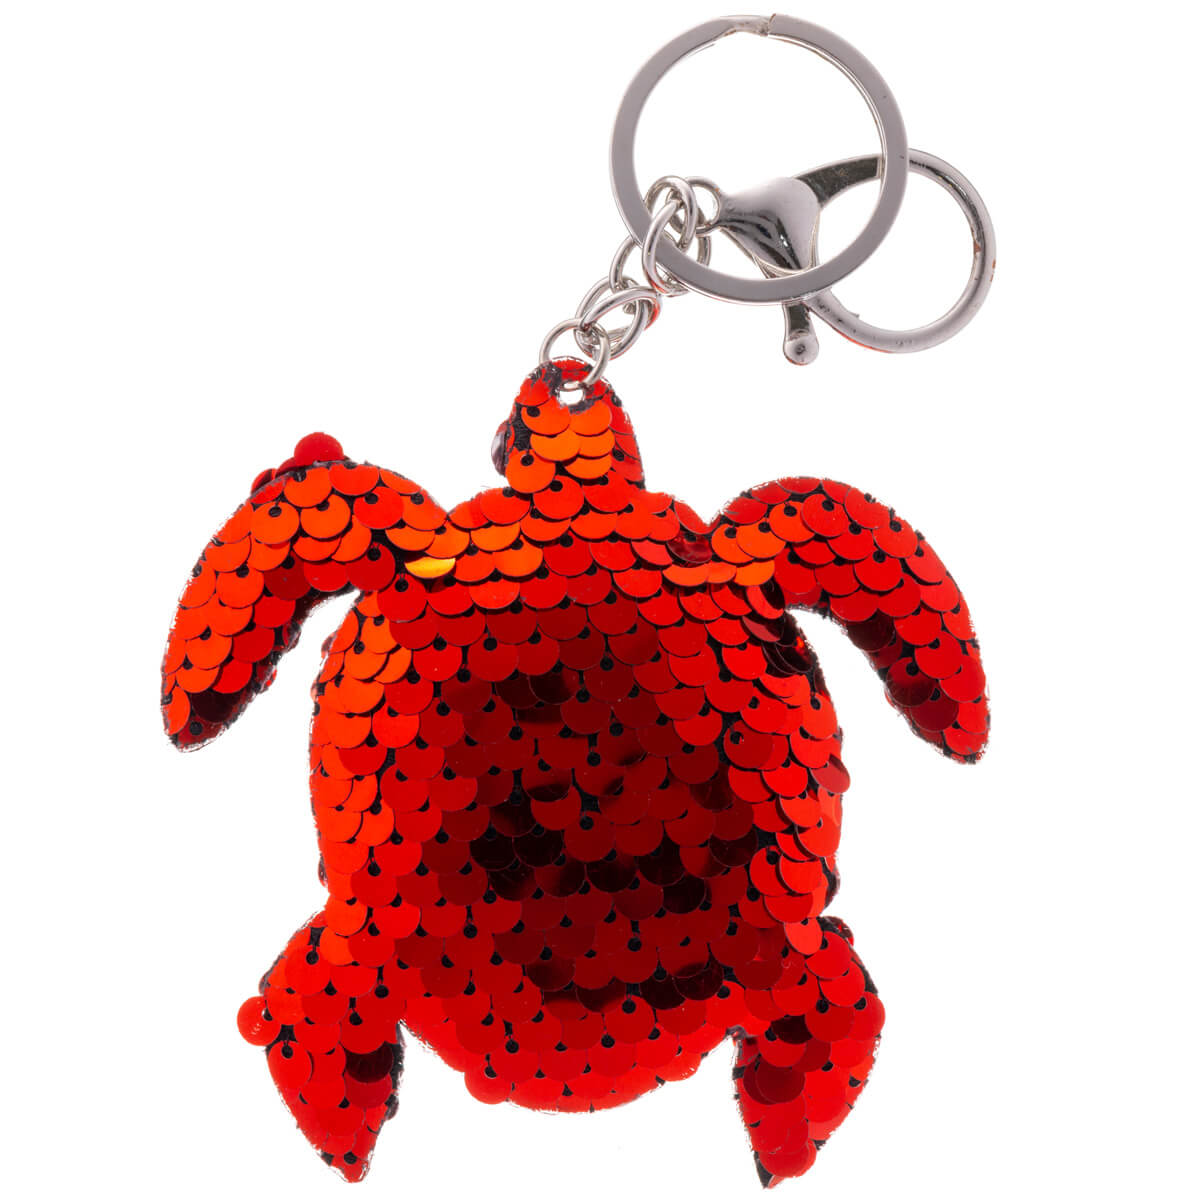 Sequin tortoise keychain